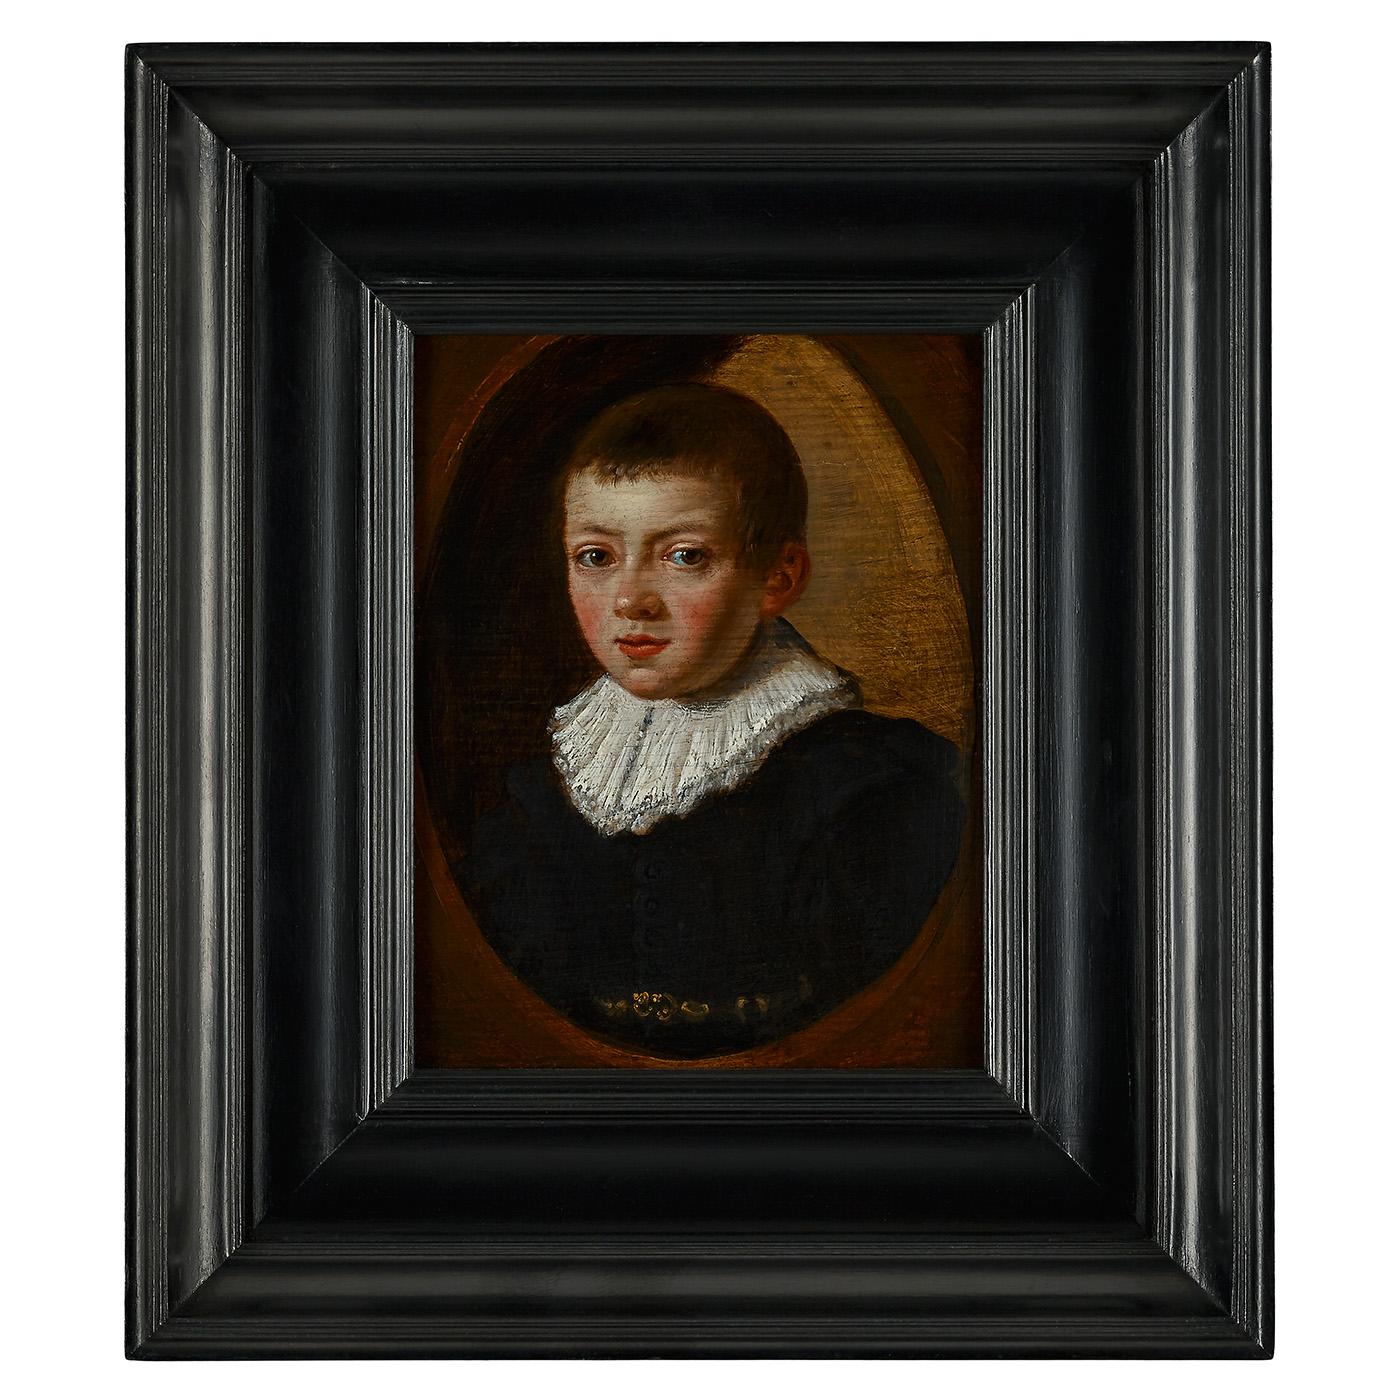 Unknown Portrait Painting - A Portrait of a Young Boy